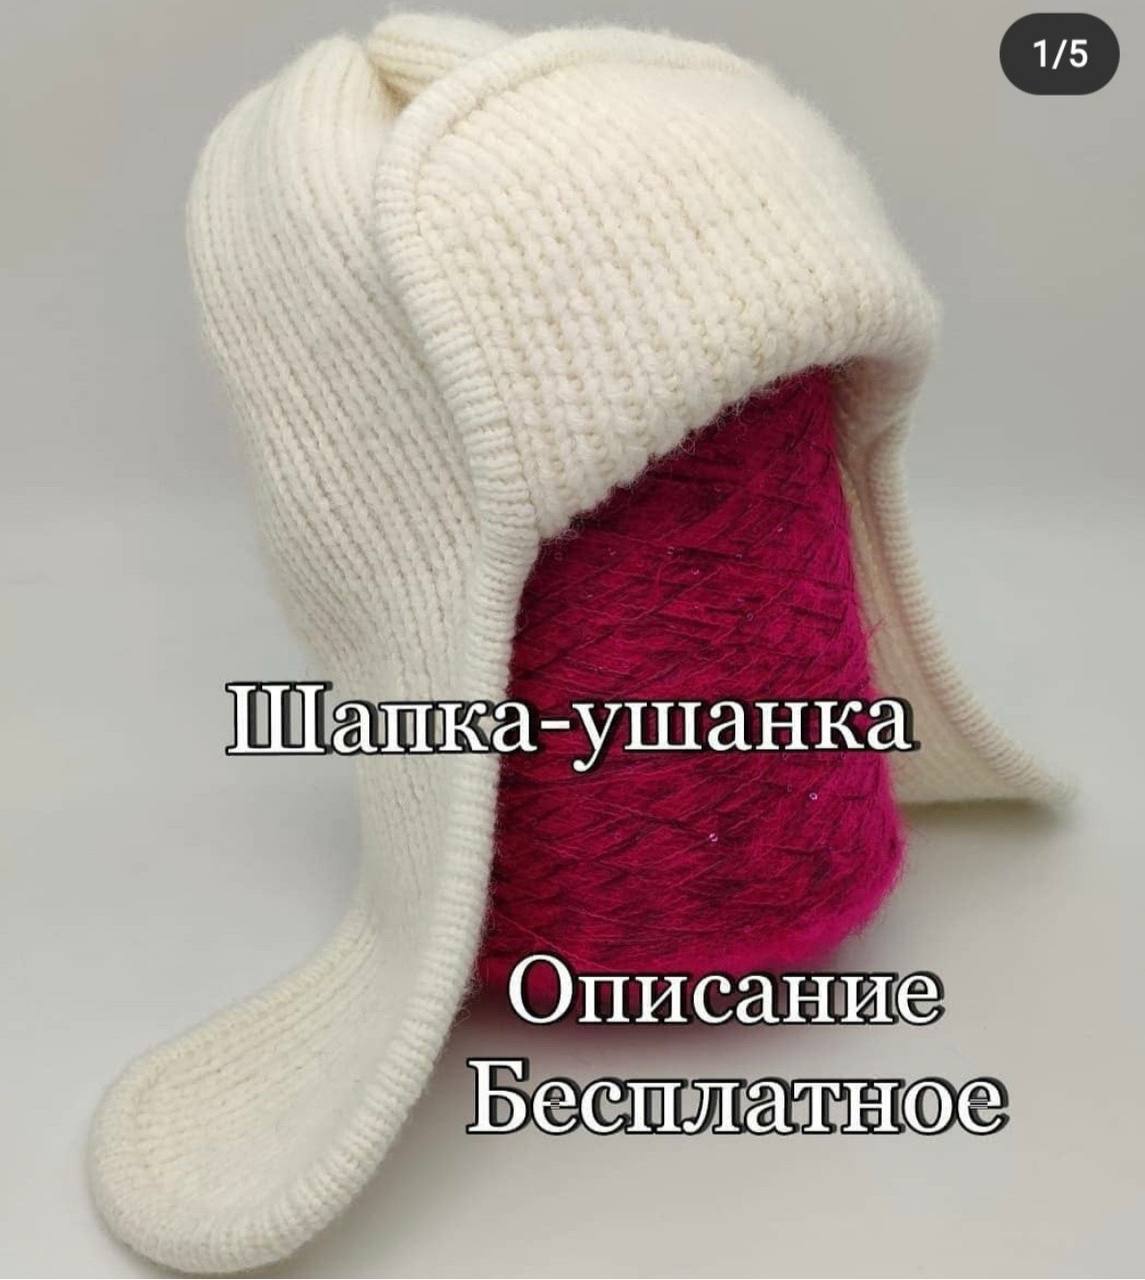 Вяжем зимние аксессуары: носки, варежки, шапки | VK